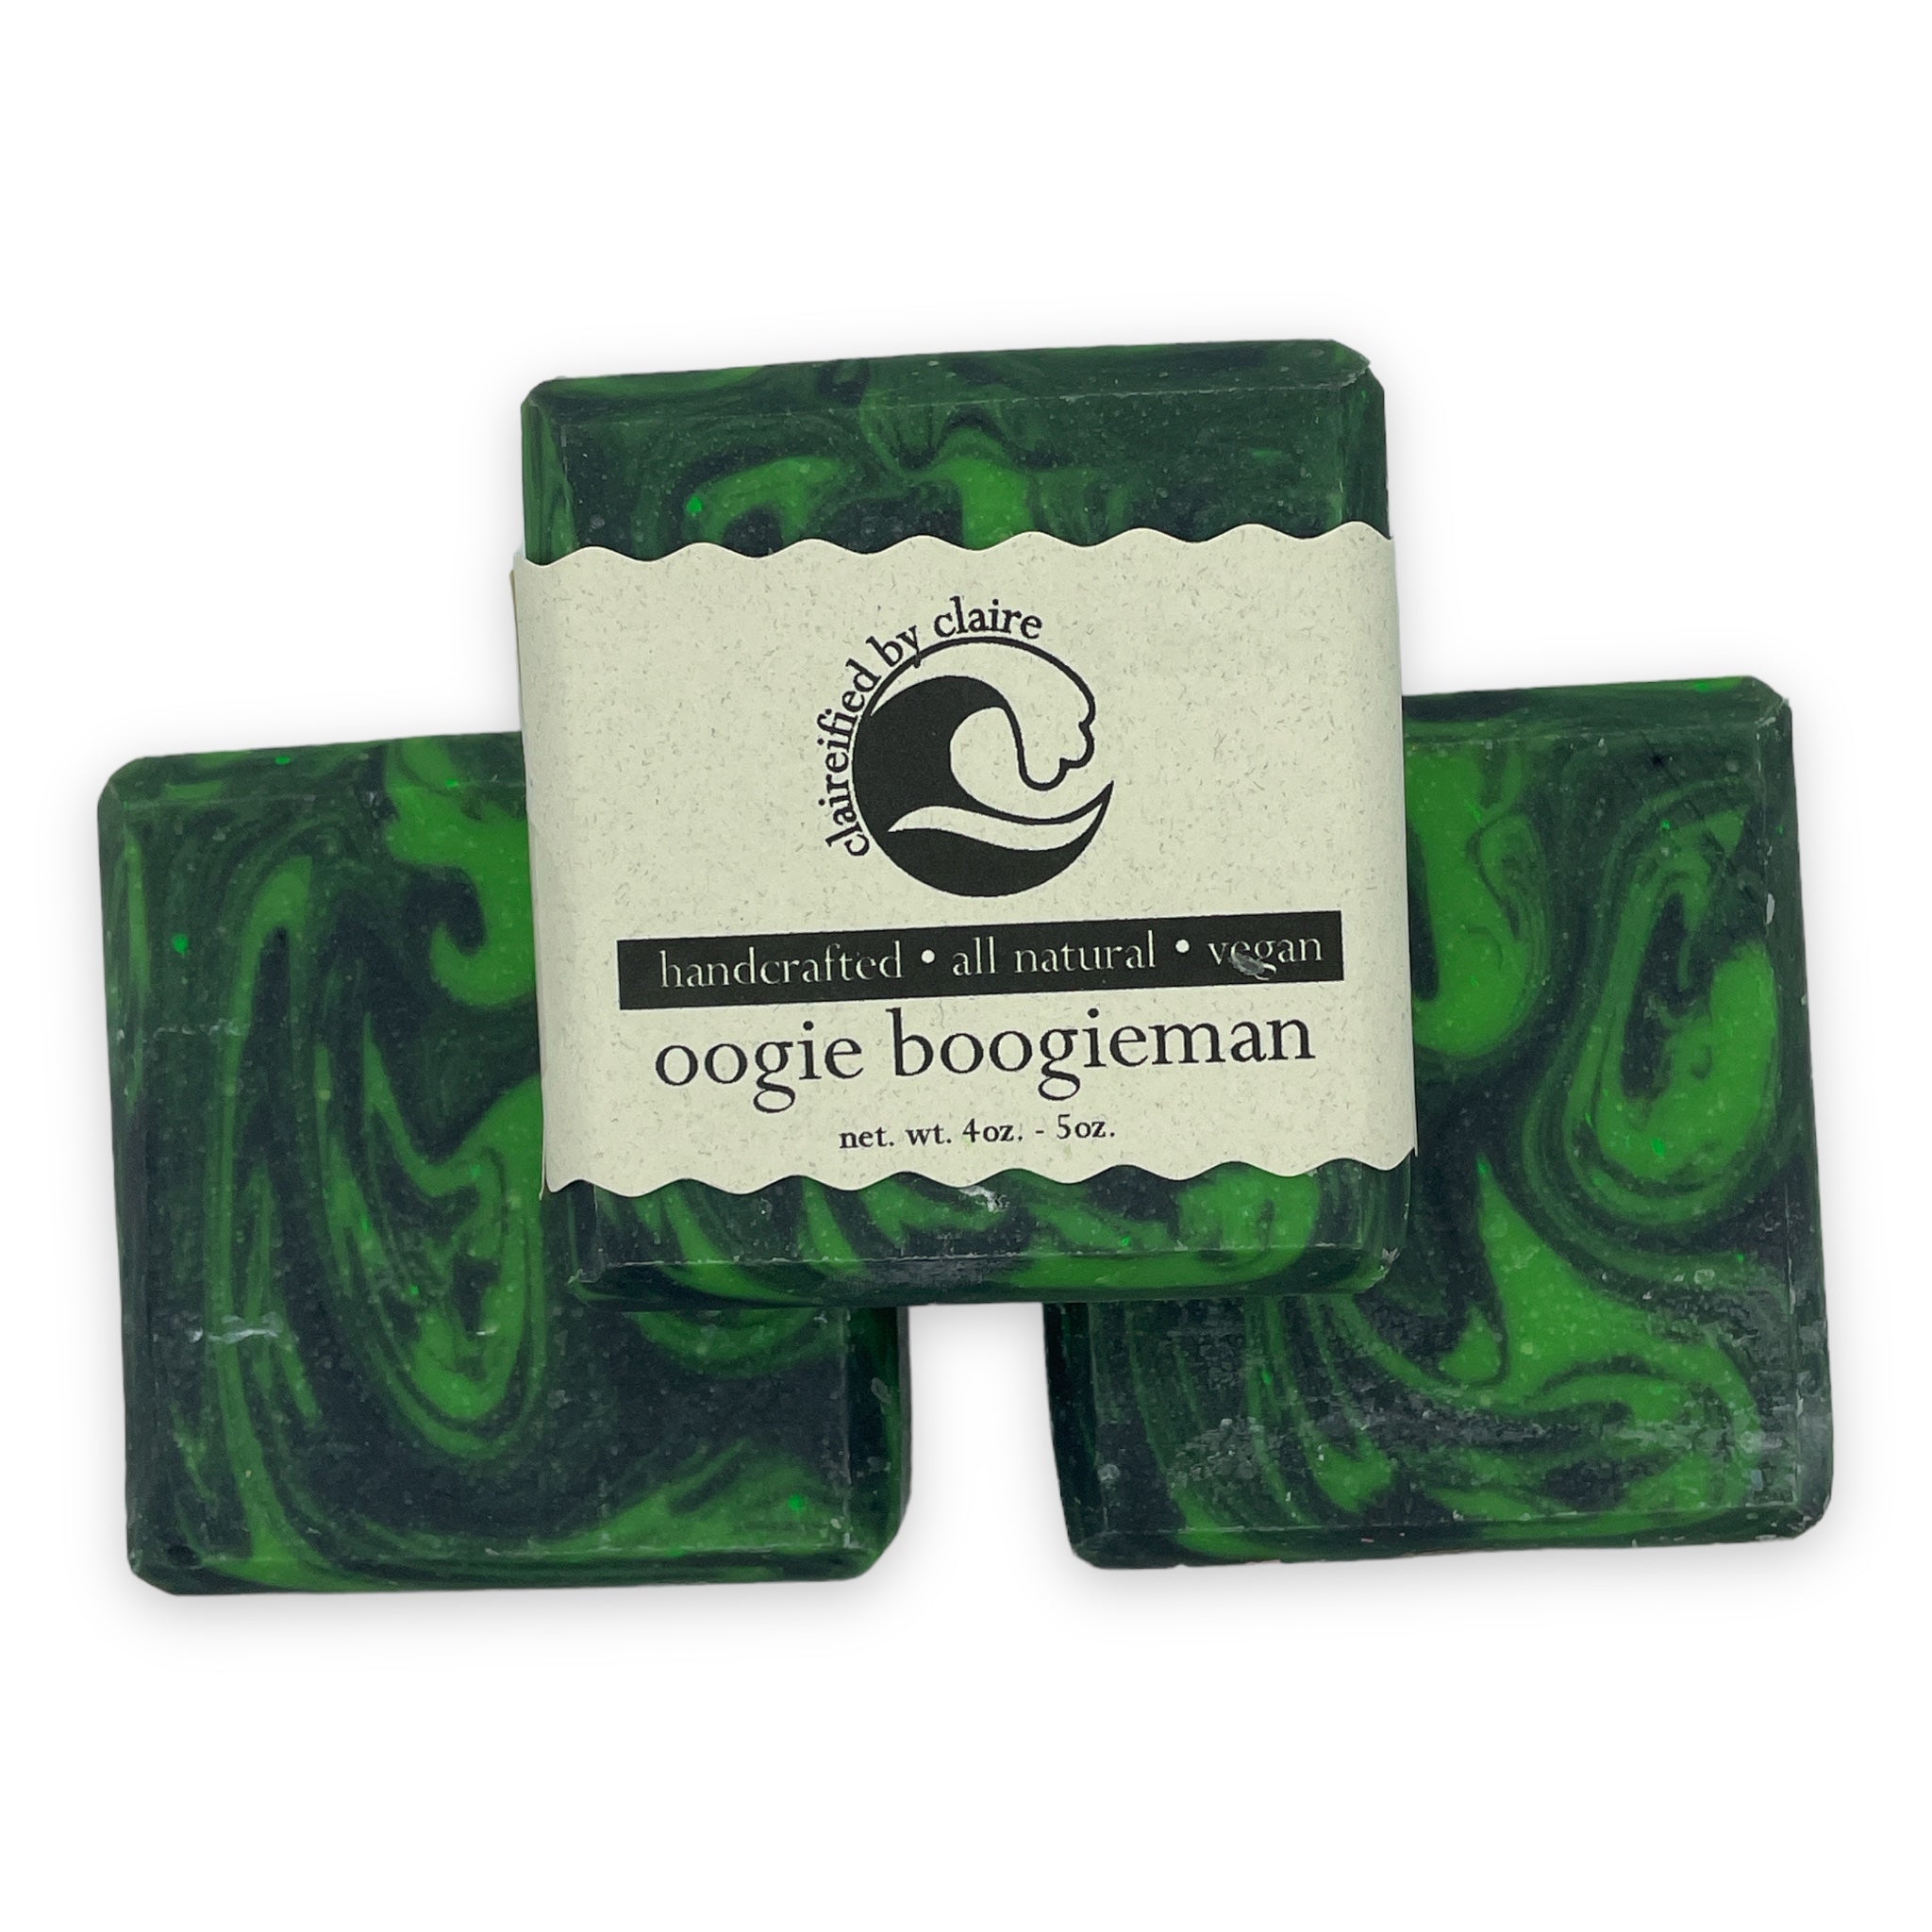 Oogie Boogieman handmade soap inspired by the Nightmare Before XMas character Oogie Boogie-1